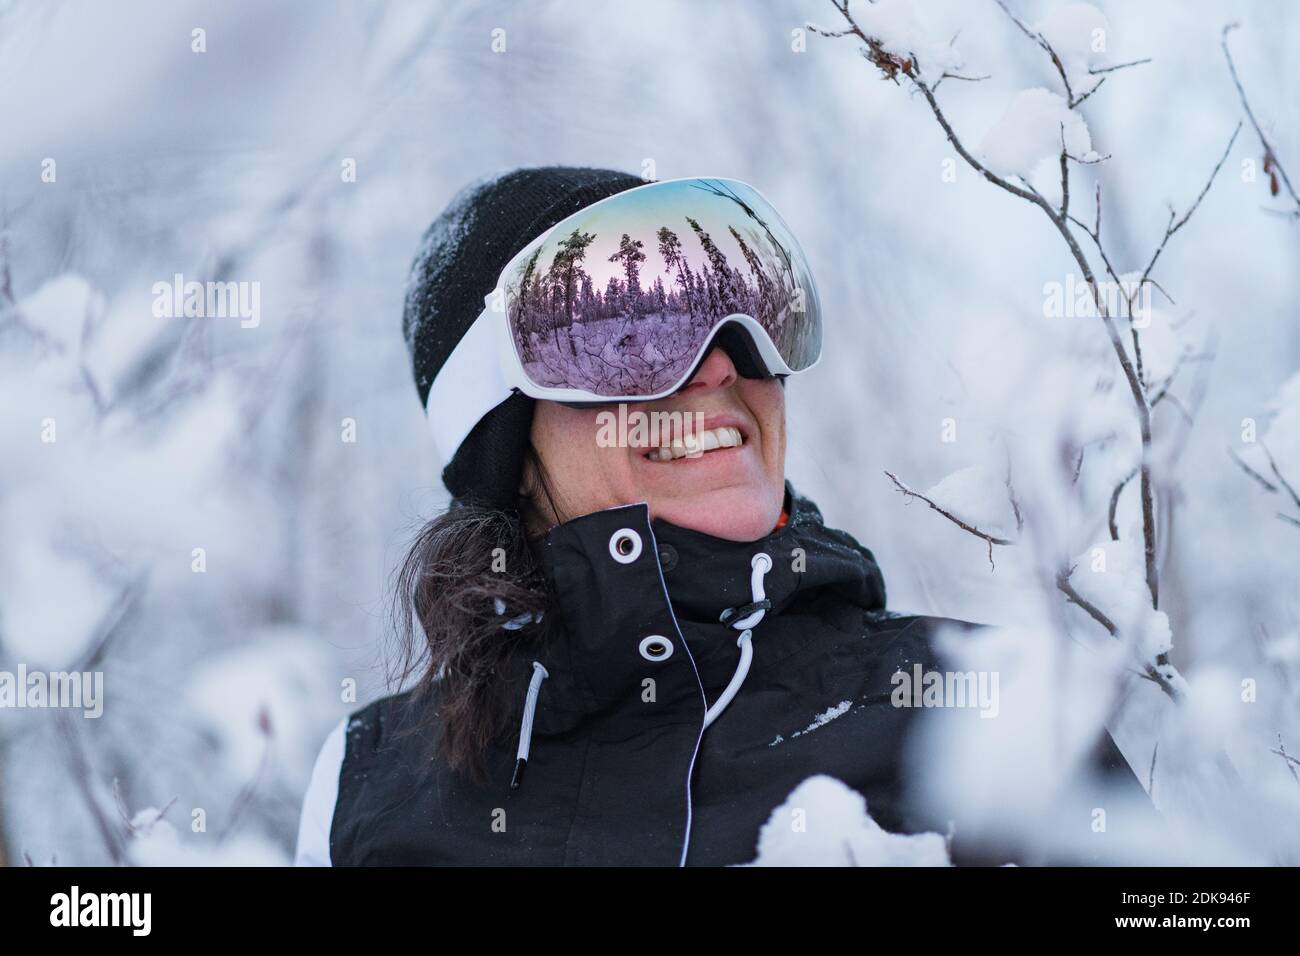 Smiling woman wearing ski goggles Stock Photo